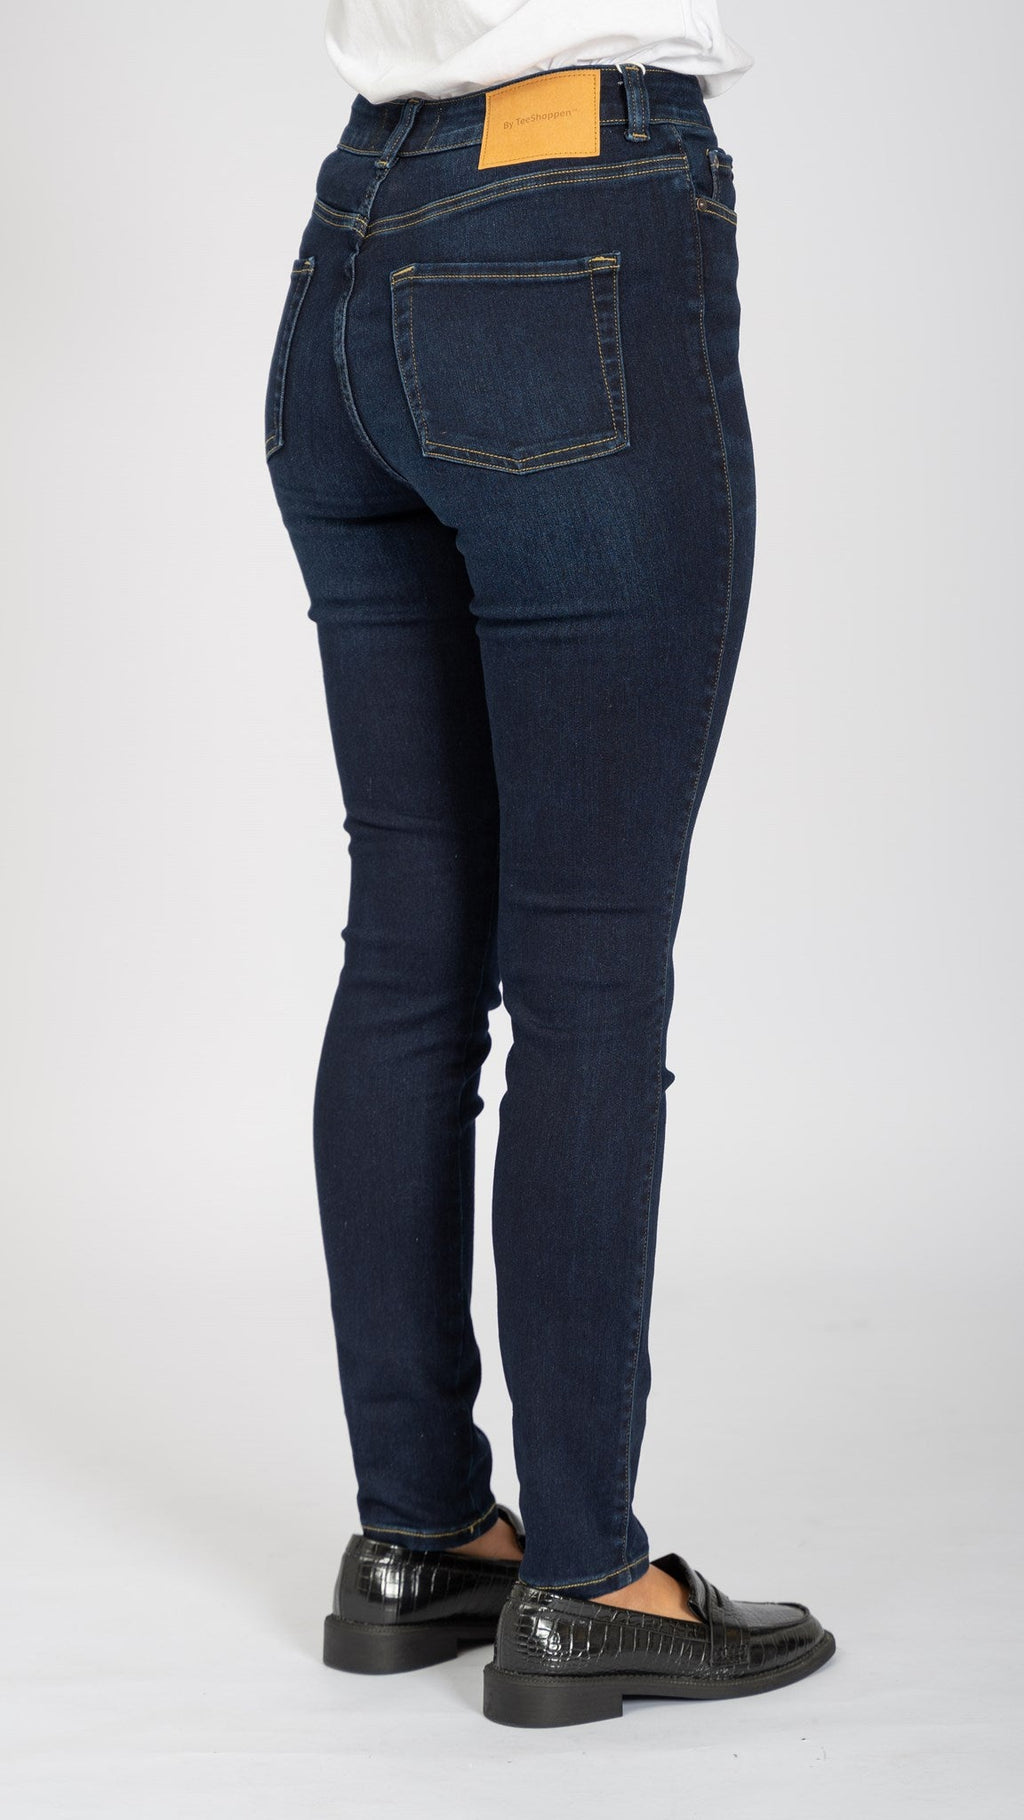 Le jean skinny de performance original - Donim bleu foncé